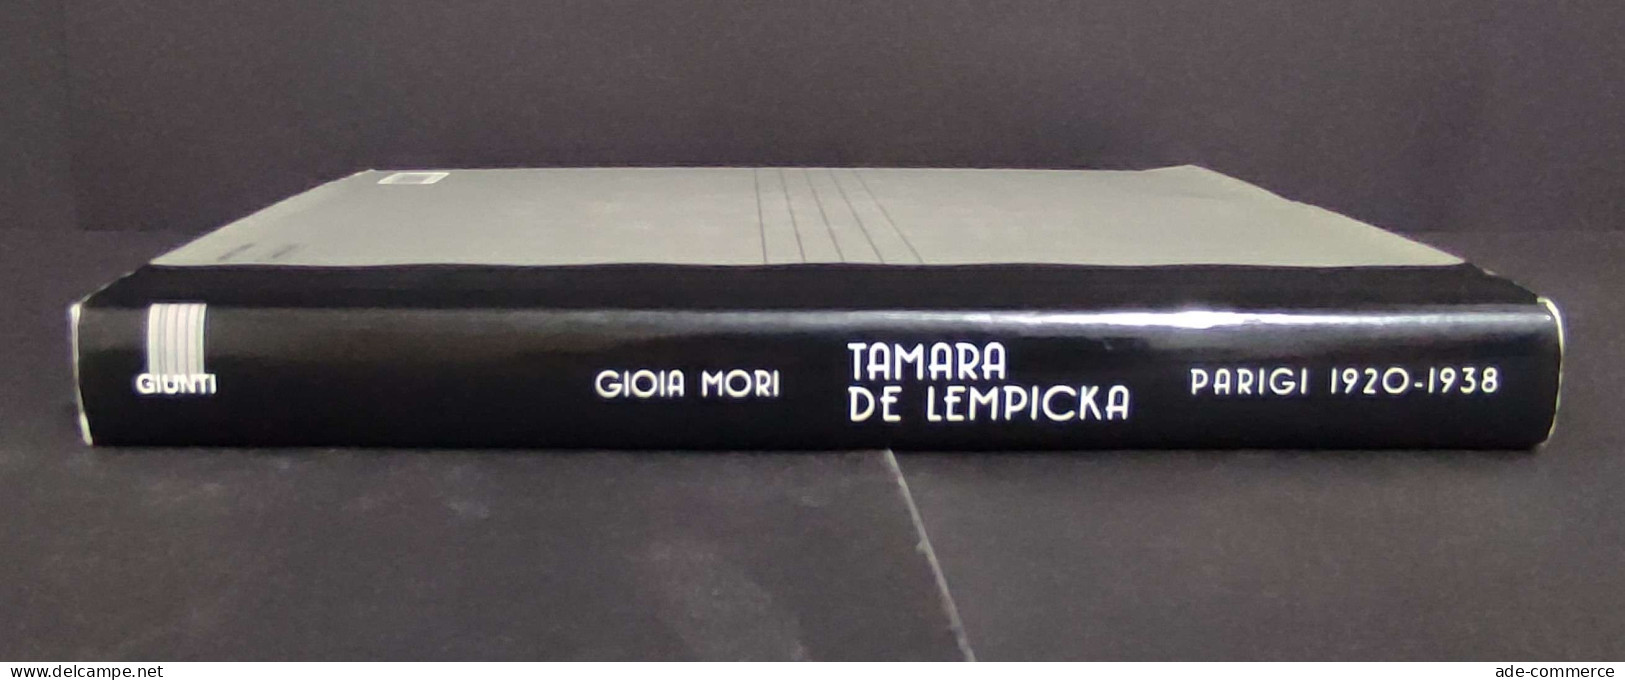 Tamara De Lempicka - Parigi 1920-1938 - G. Mori - Ed. Giunti - 1995 - Arte, Antigüedades